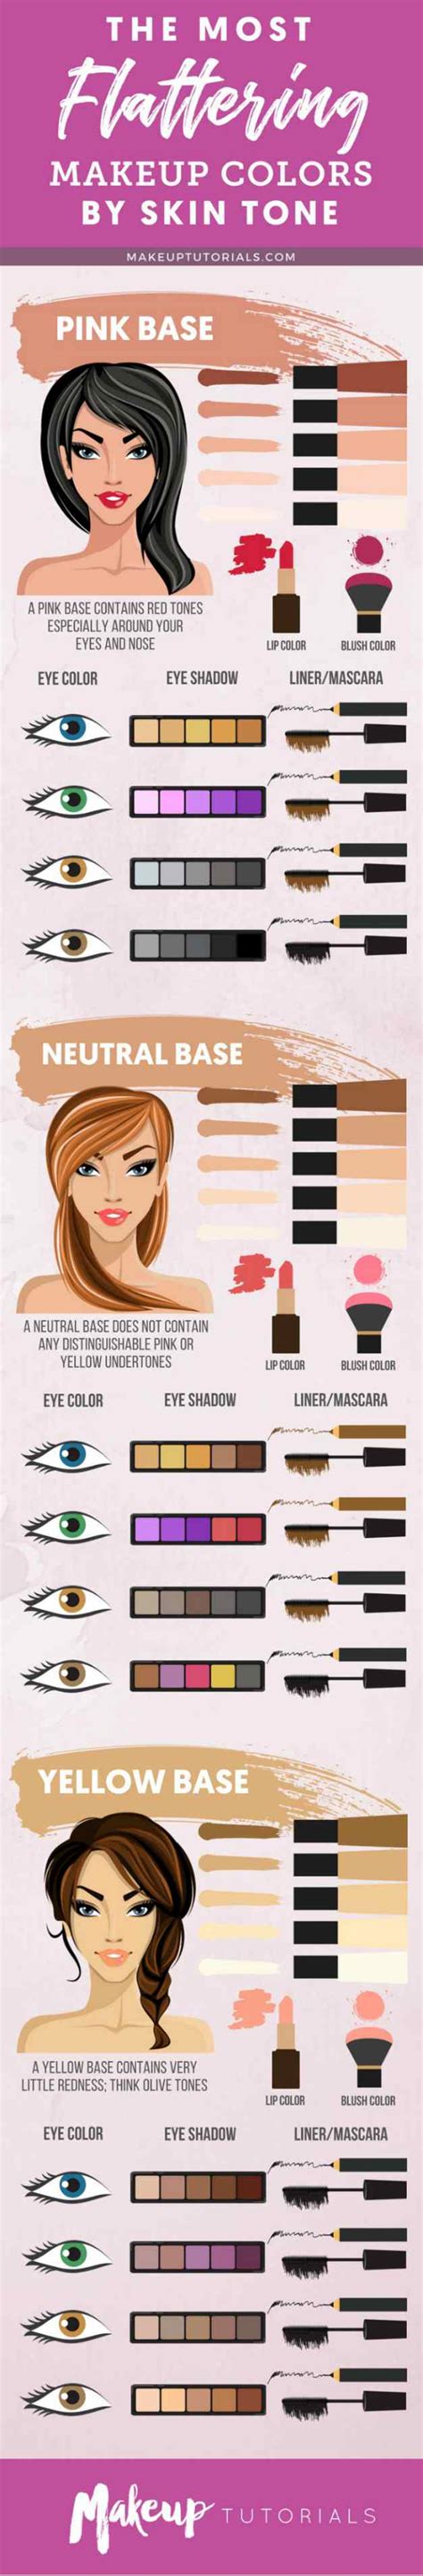 Makeup Guide Makeup Colors By Skin Tone Makeup Tutorials